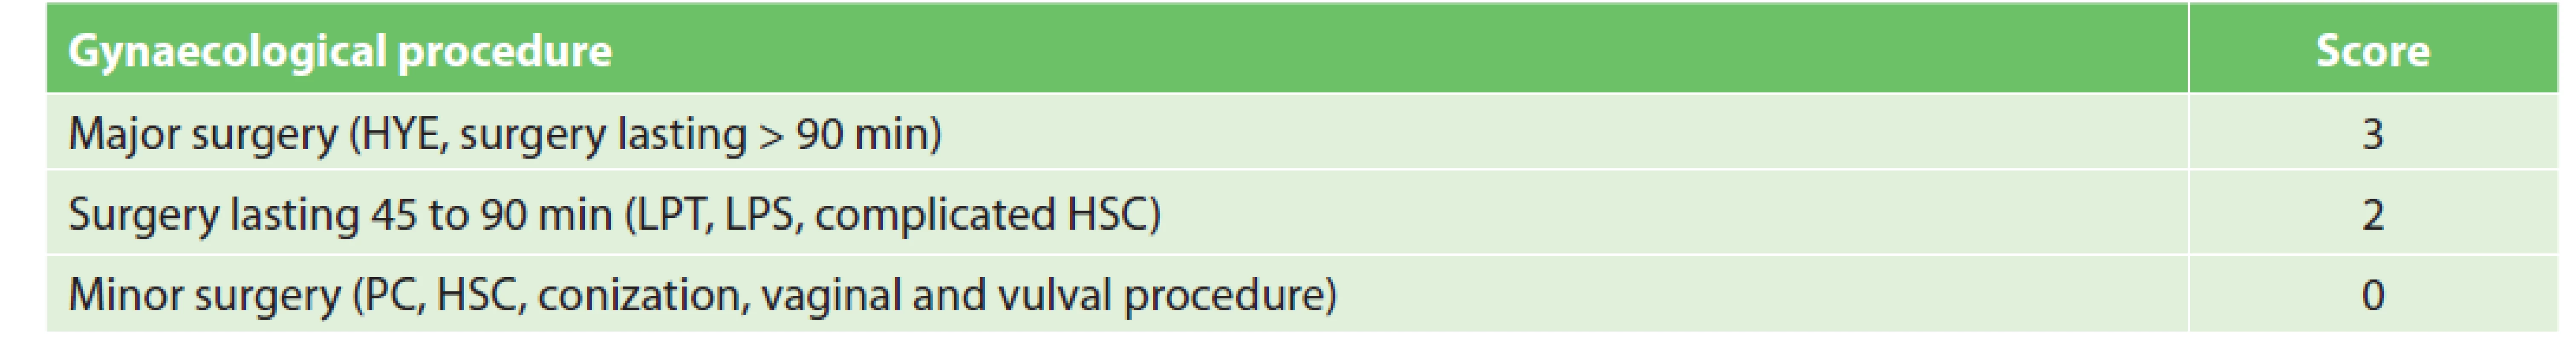 Gynaecological procedure scoring